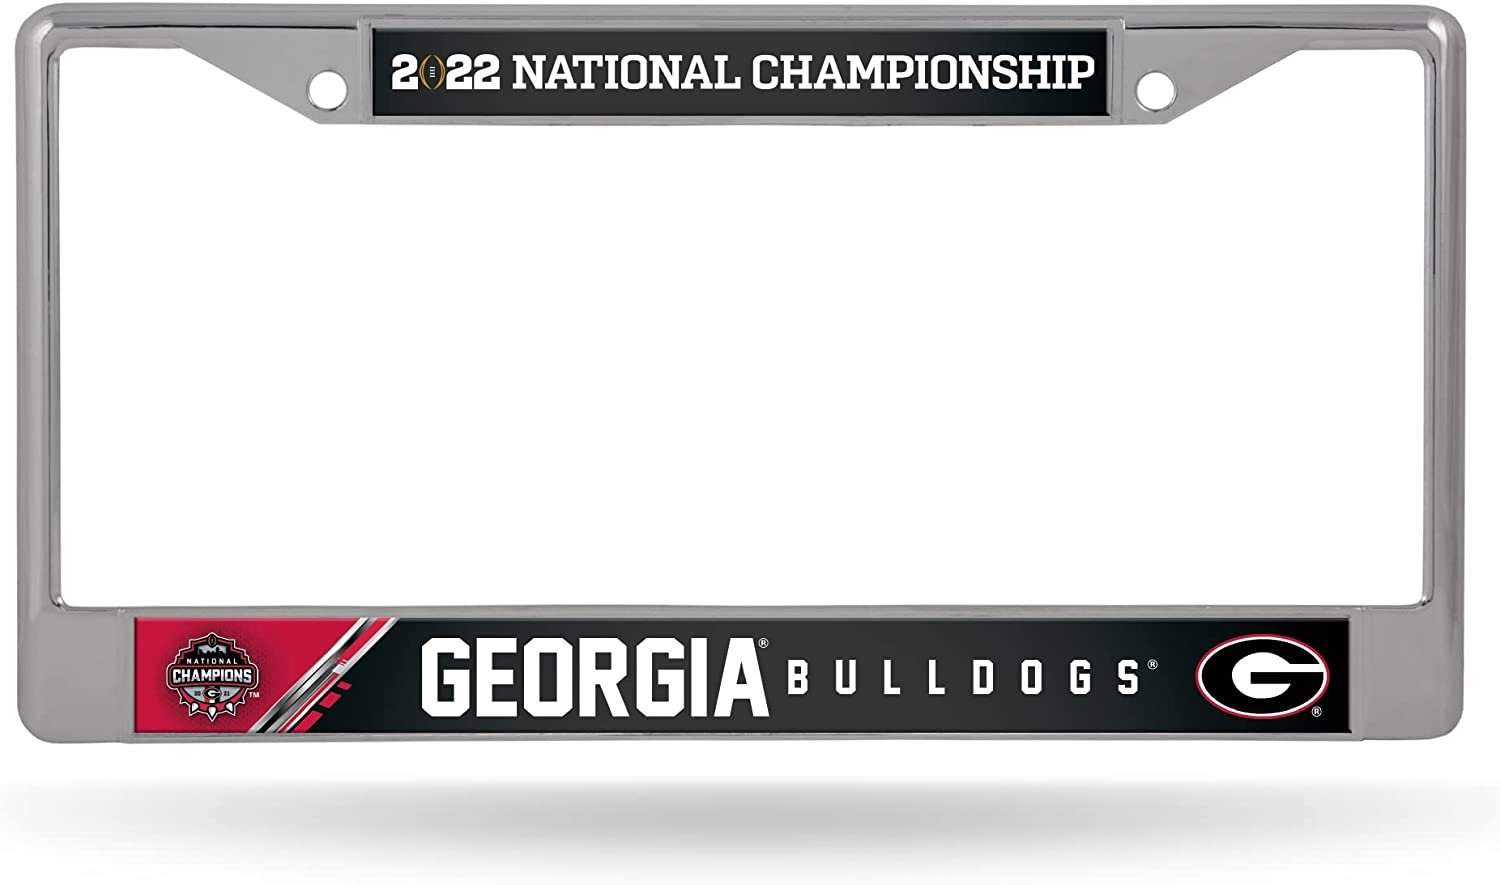 University of Georgia Bulldogs 2022 Champions Metal License Plate Frame Chrome Tag Cover